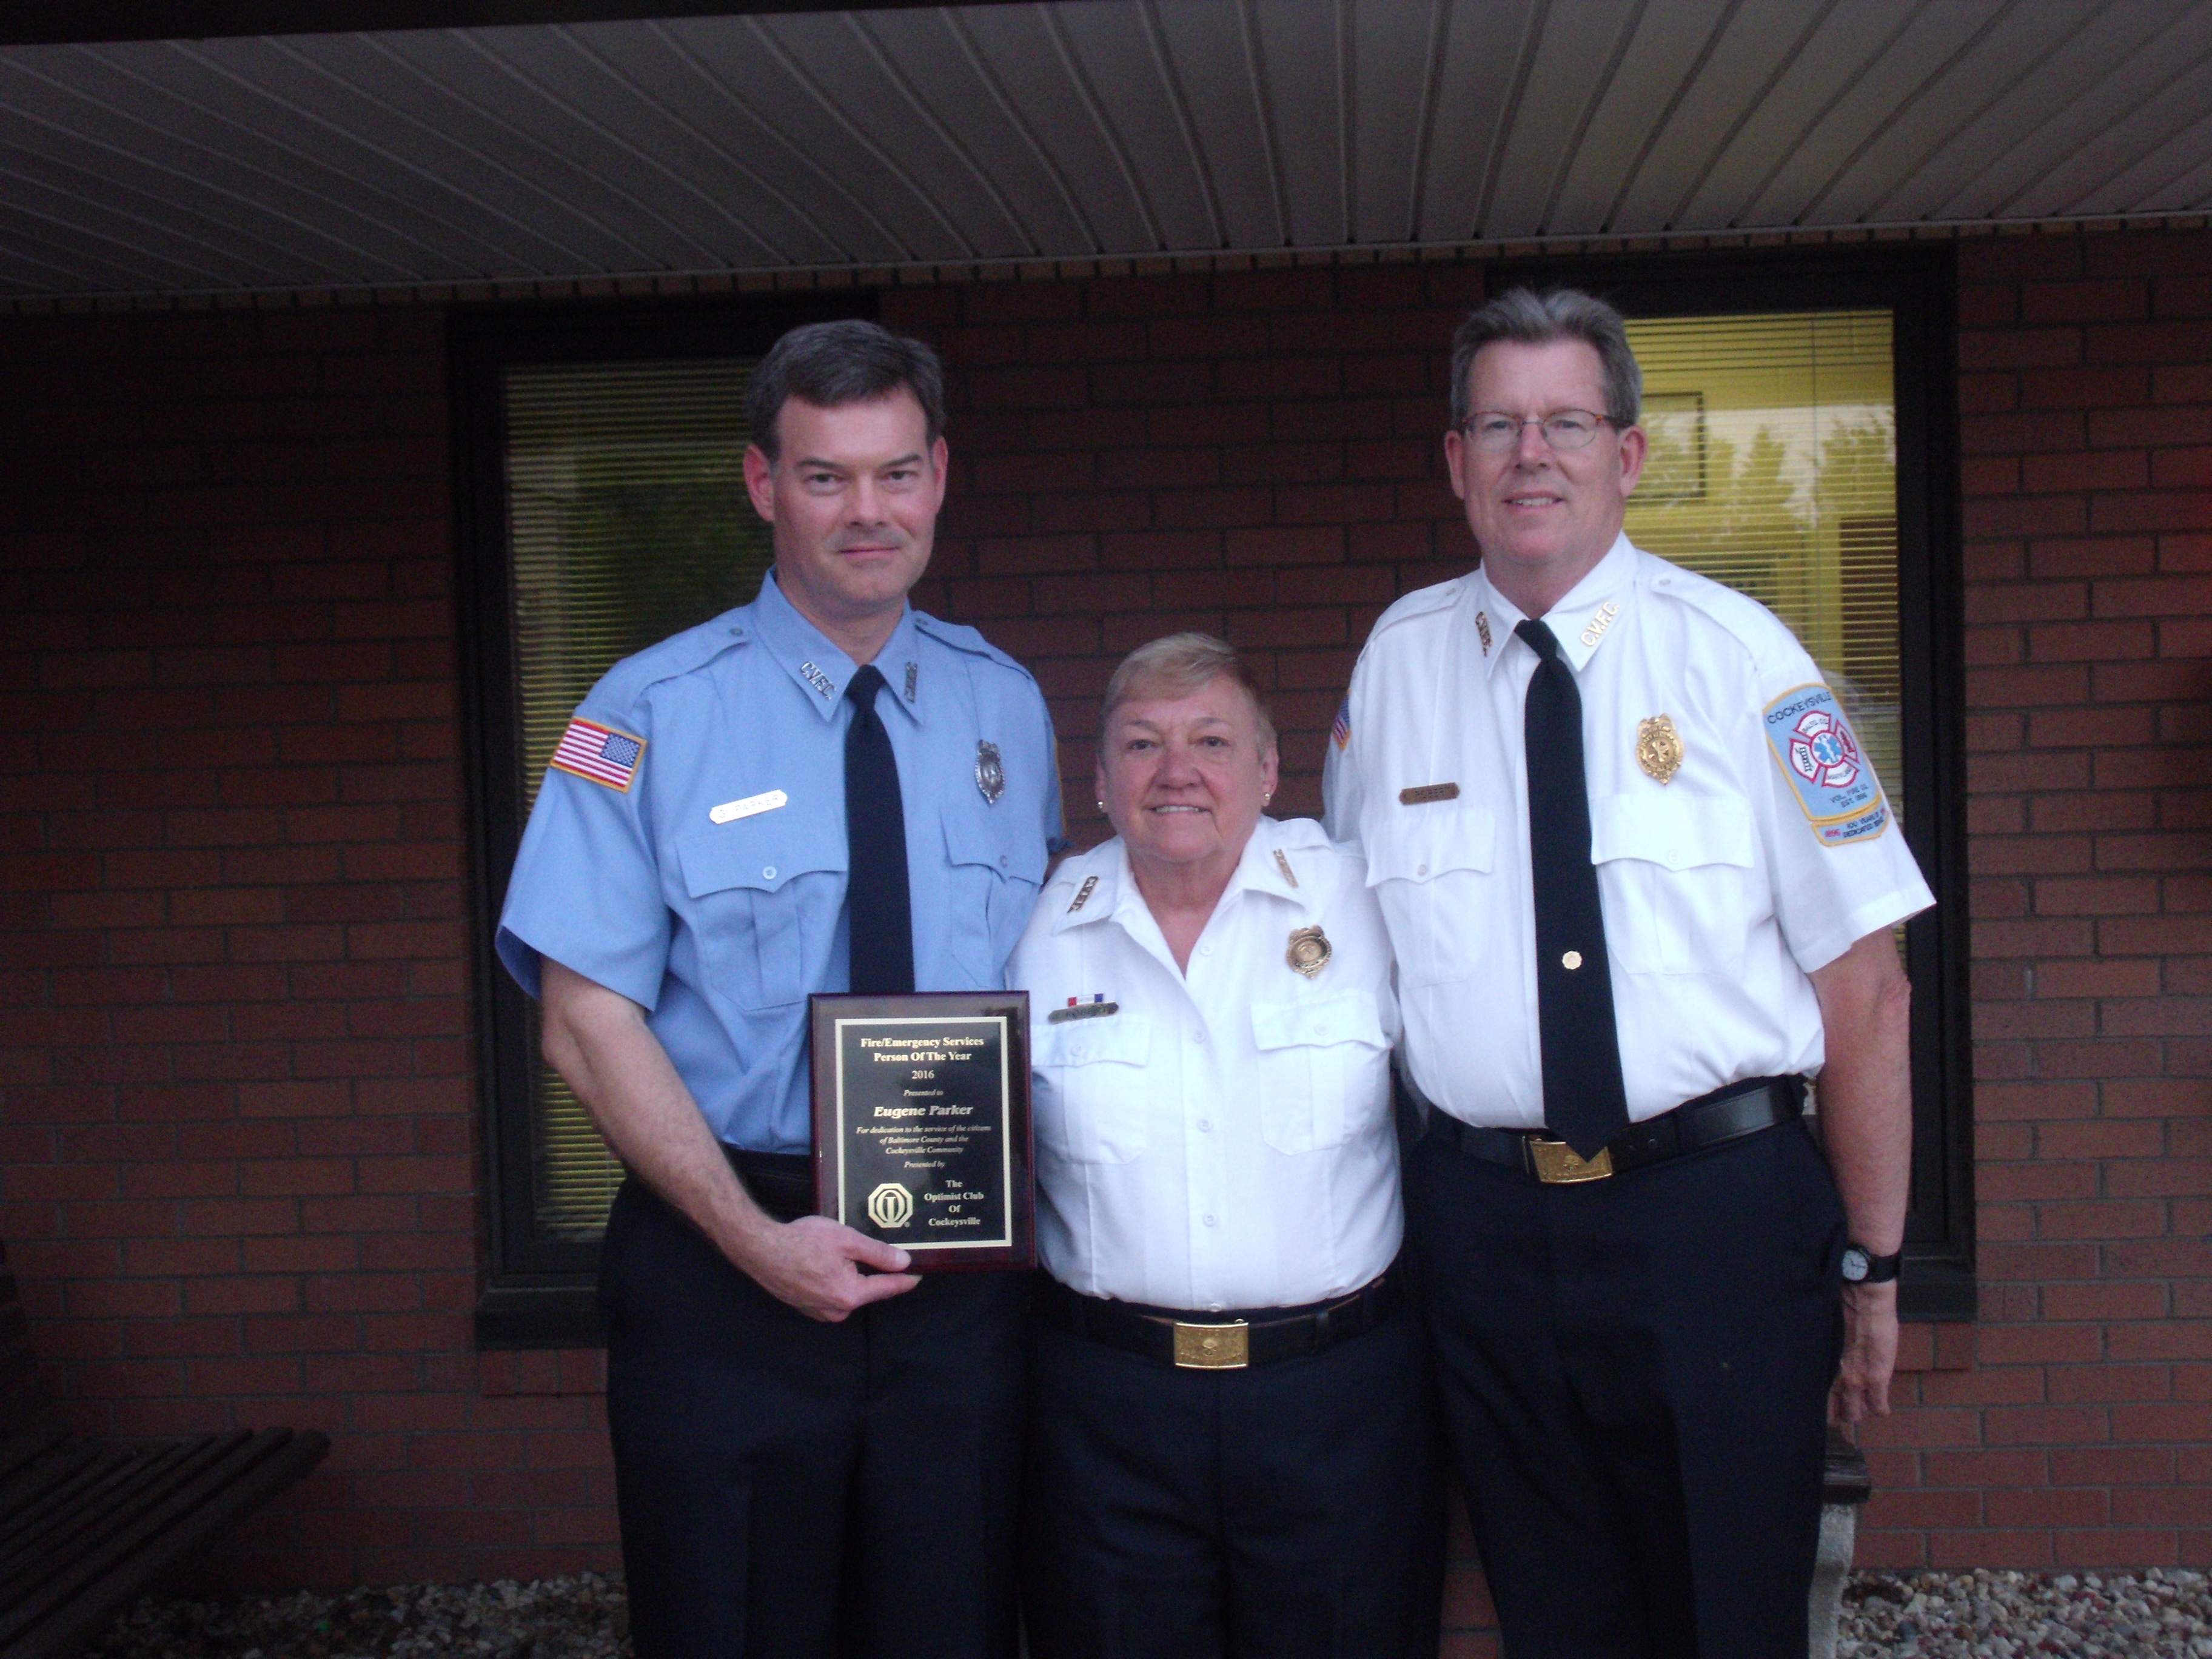 Gene Parker named Firefighter of the Year!